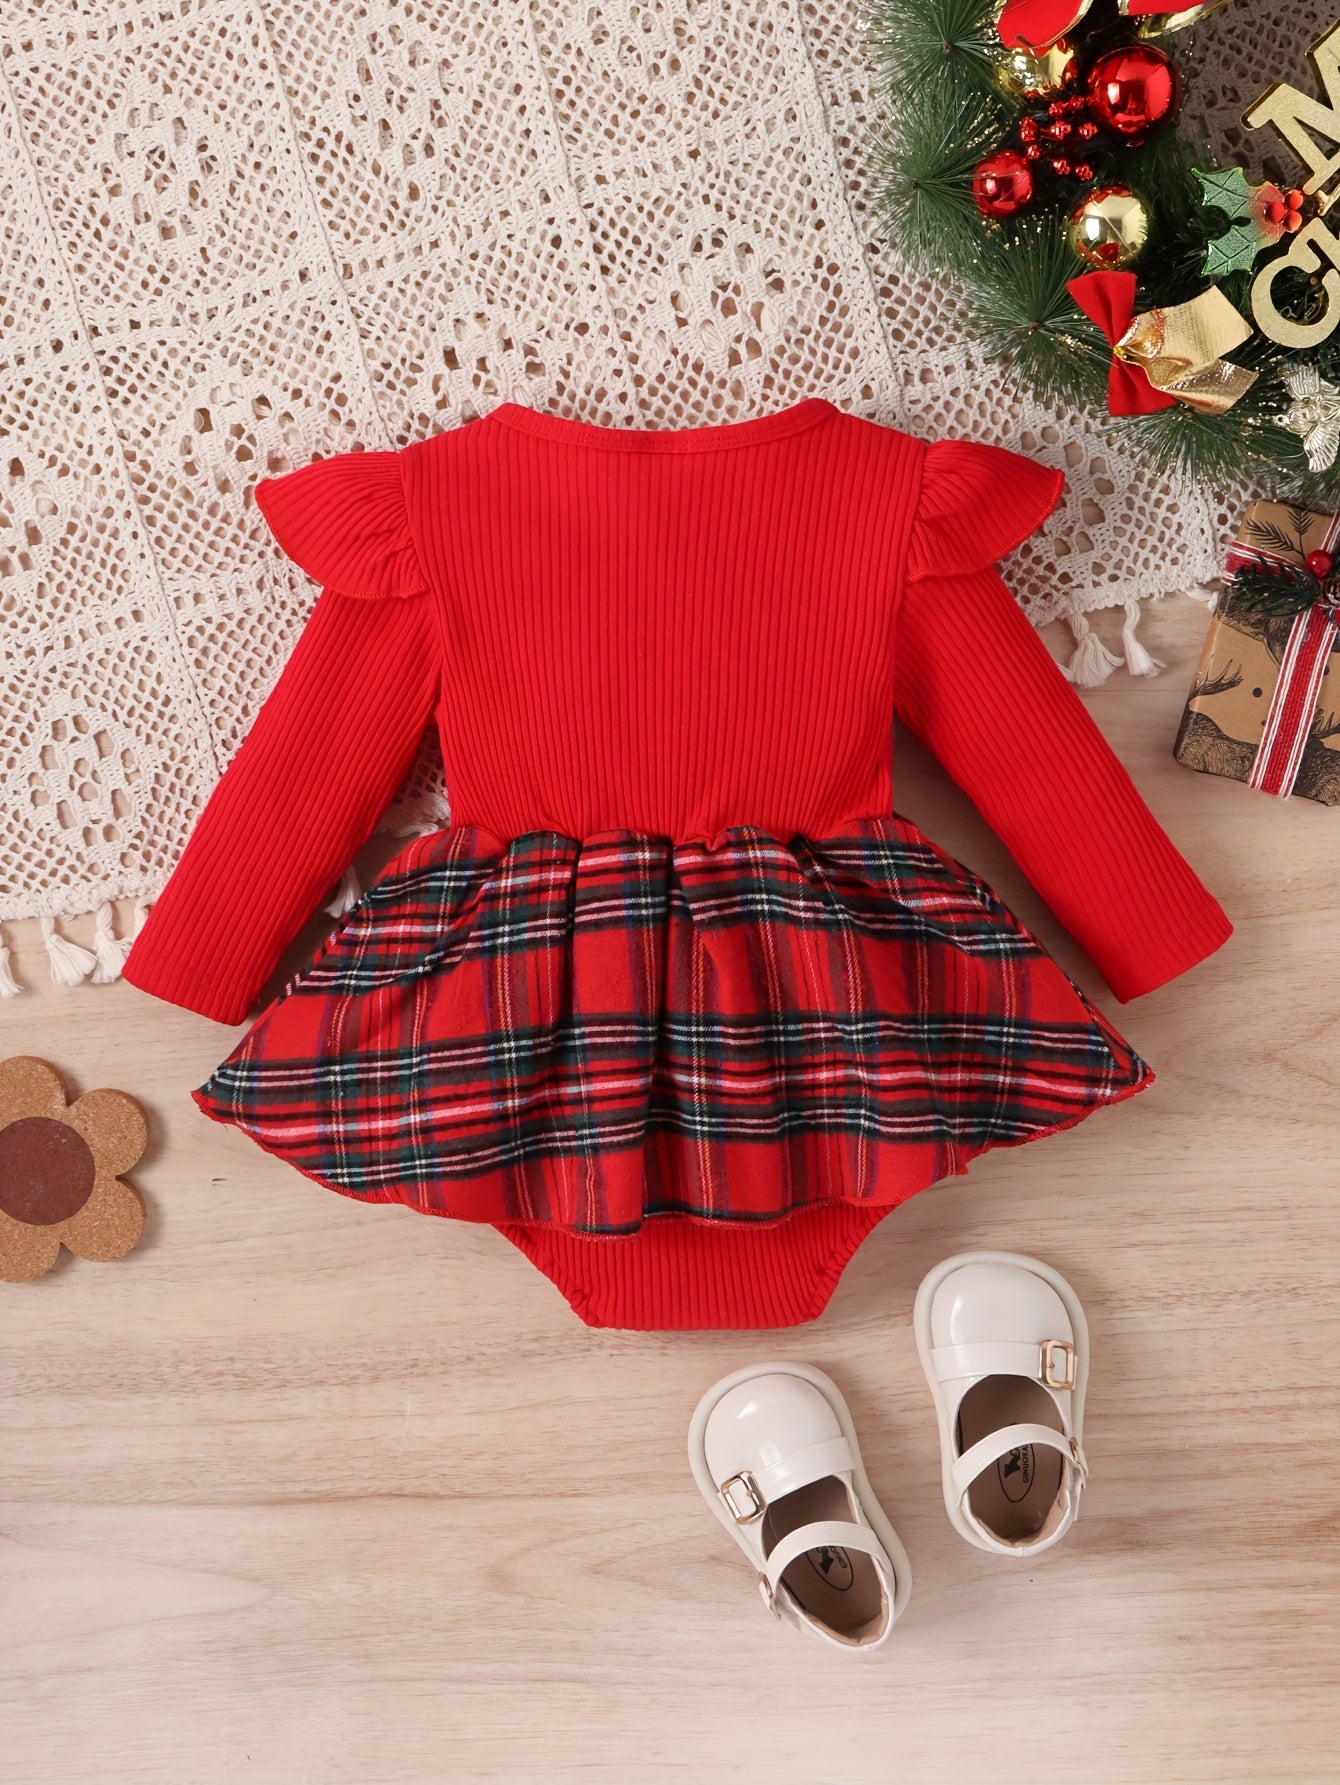 Baby Girls Cute Christmas Long-sleeved Plaid Dress Romper